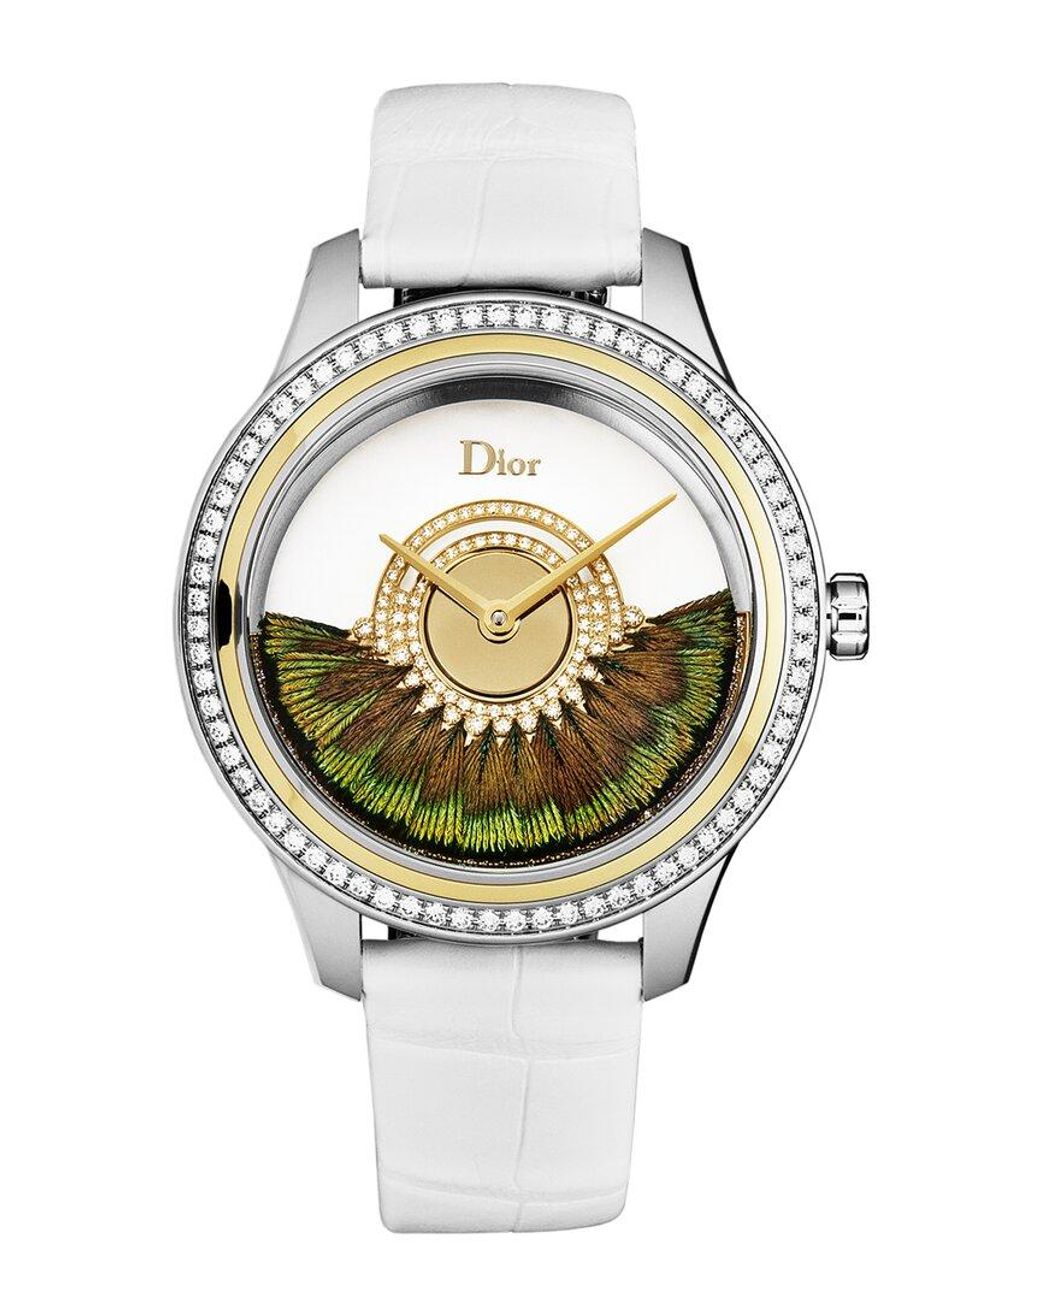 Dior Grand Bal Couture Đồng hồ tùy biến tại sao không